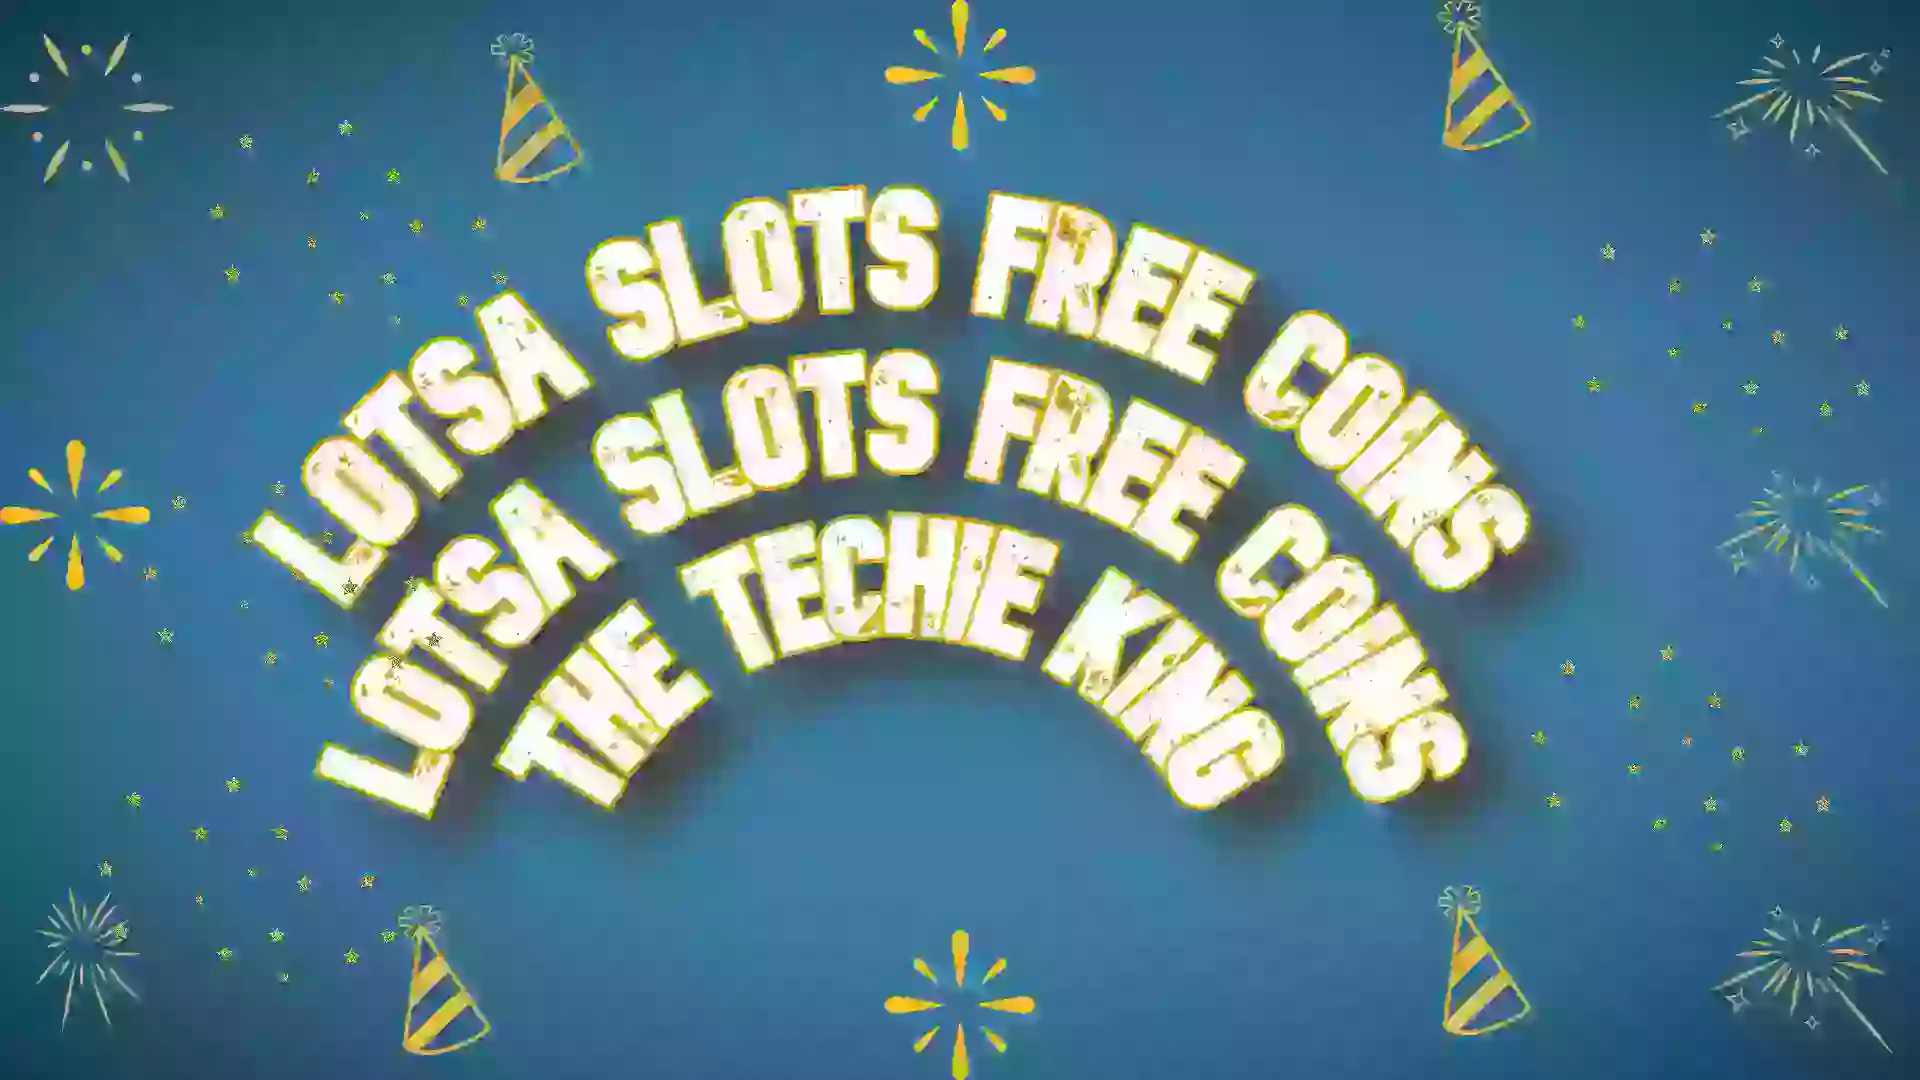 Lotsa slots free coins